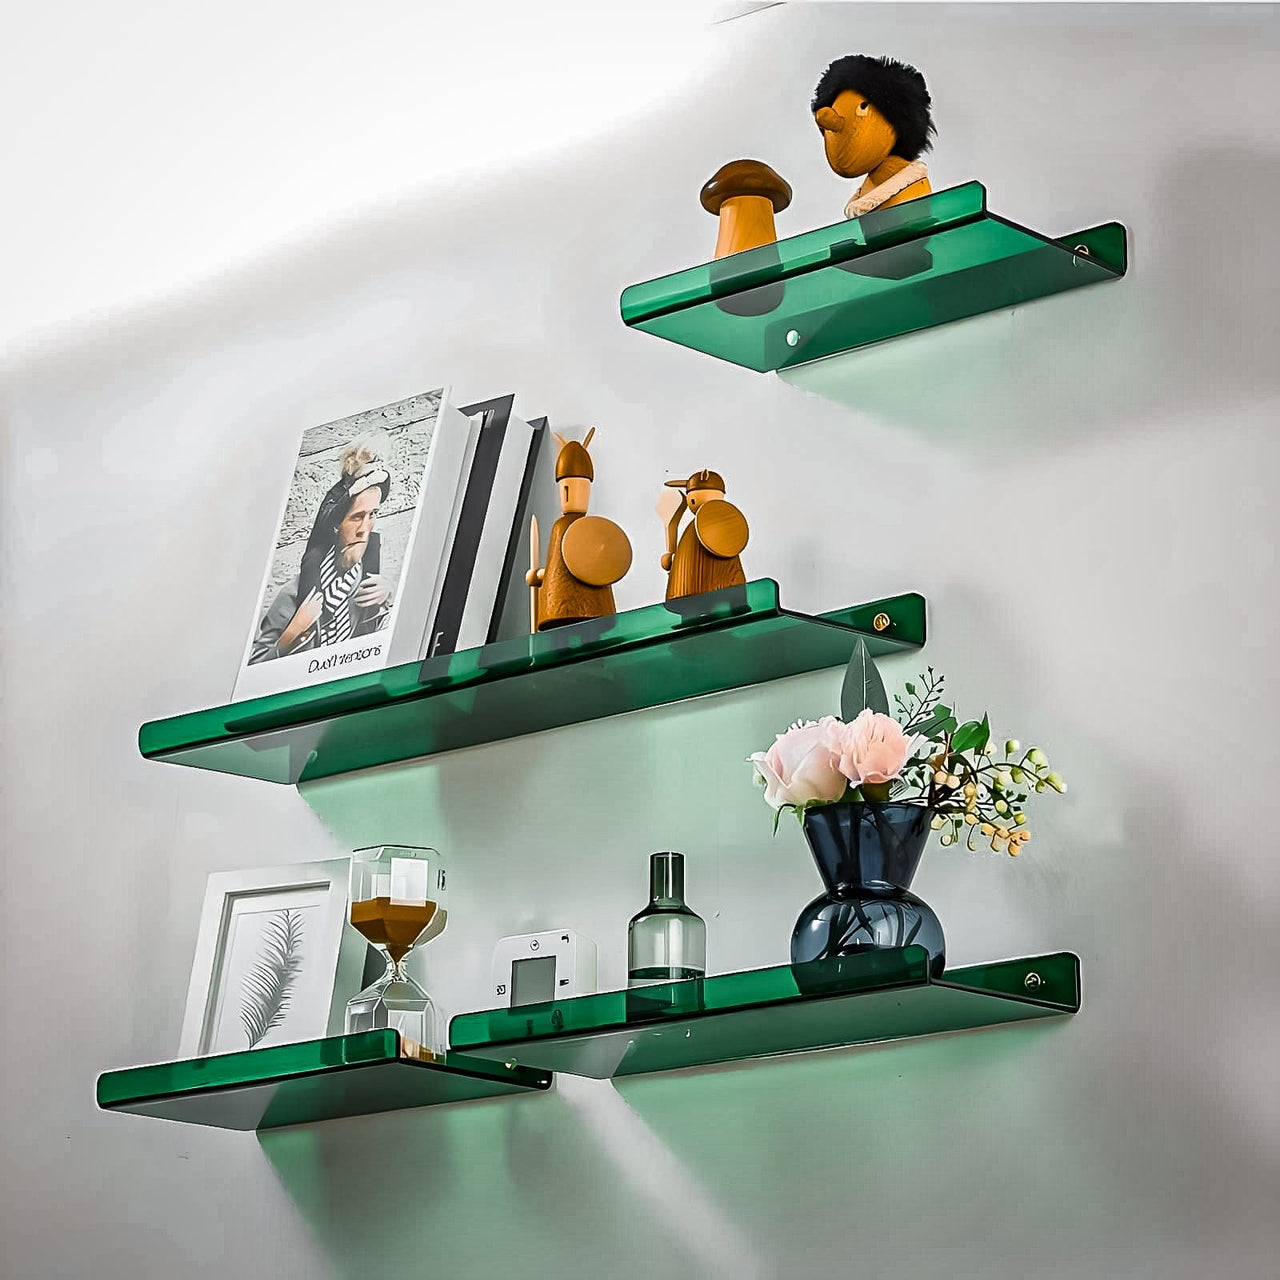 The Minimal Acrylic Shelf